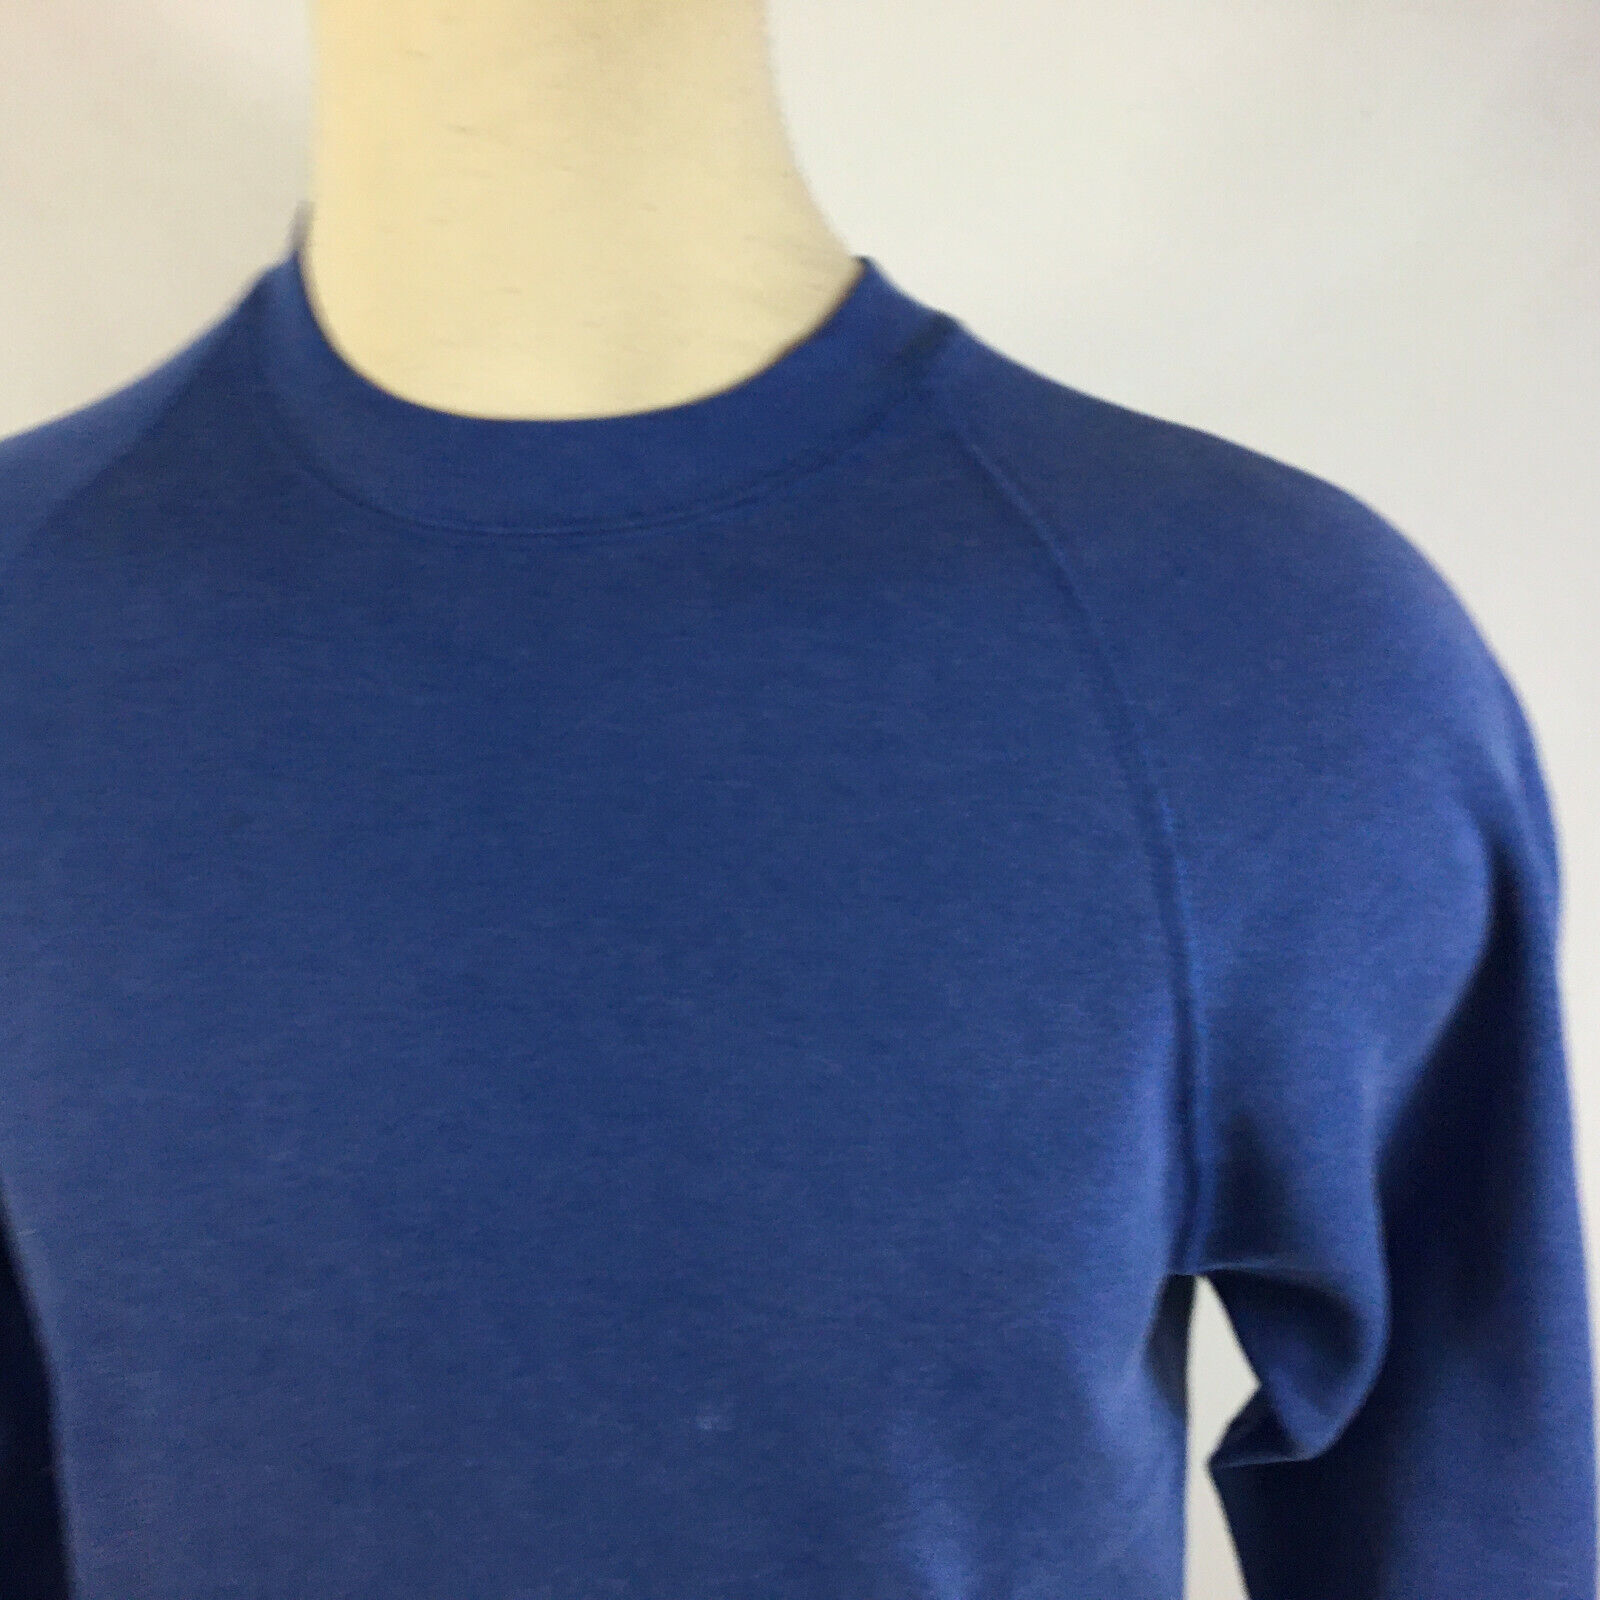 Vintage 80s 90s Blank Plain Royal Blue Sweatshirt… - image 3